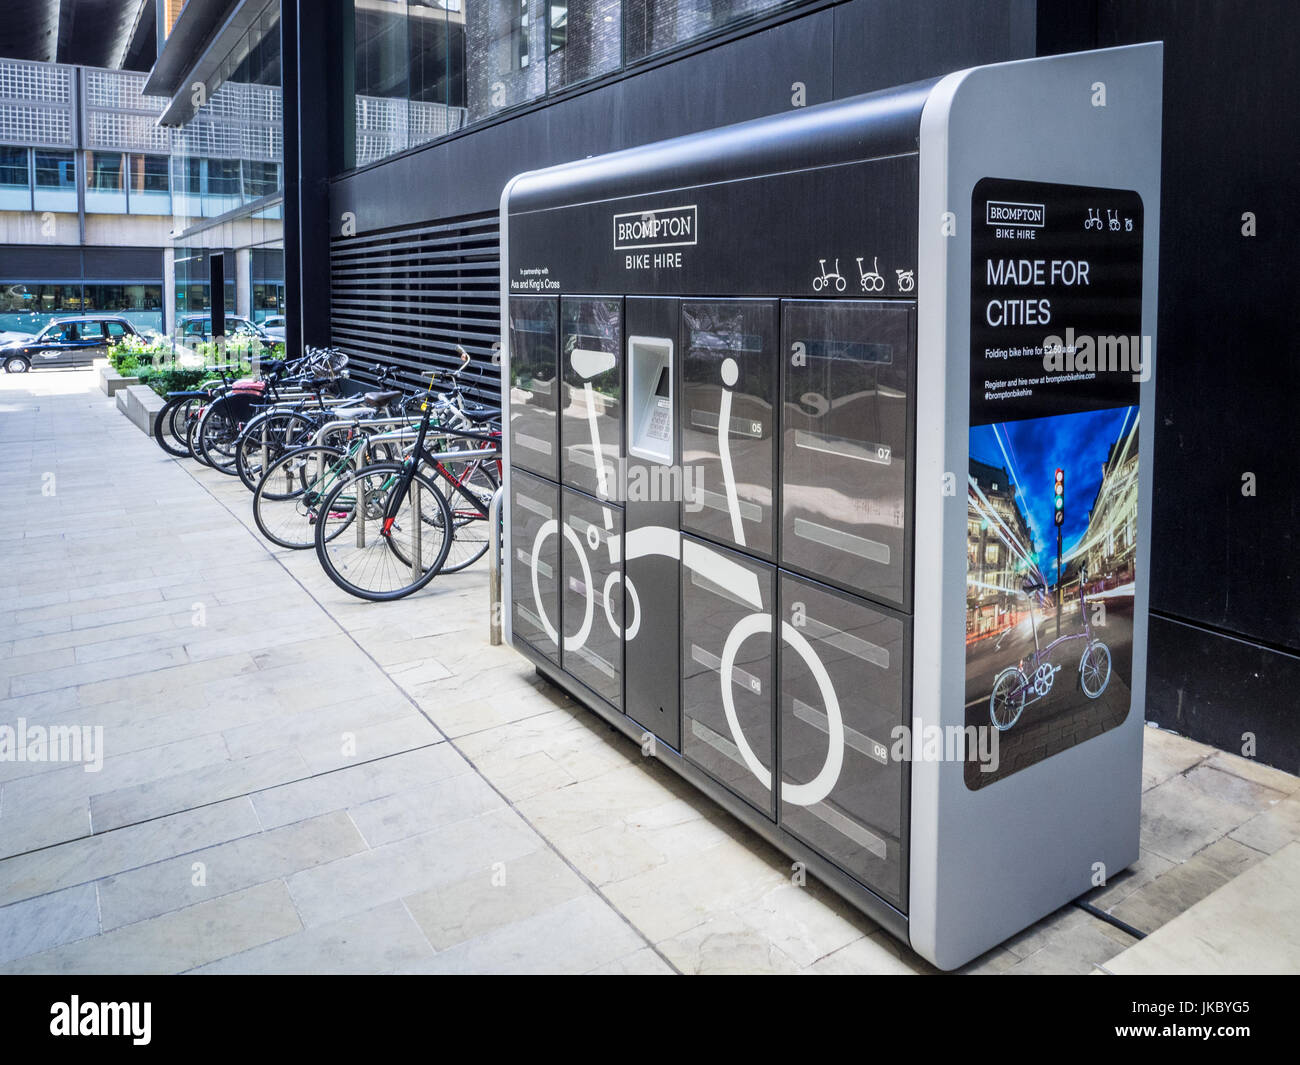 Brompton Folding Bike Hire vending machine outside the Google Offices in London's Kings Cross development Stock Photo